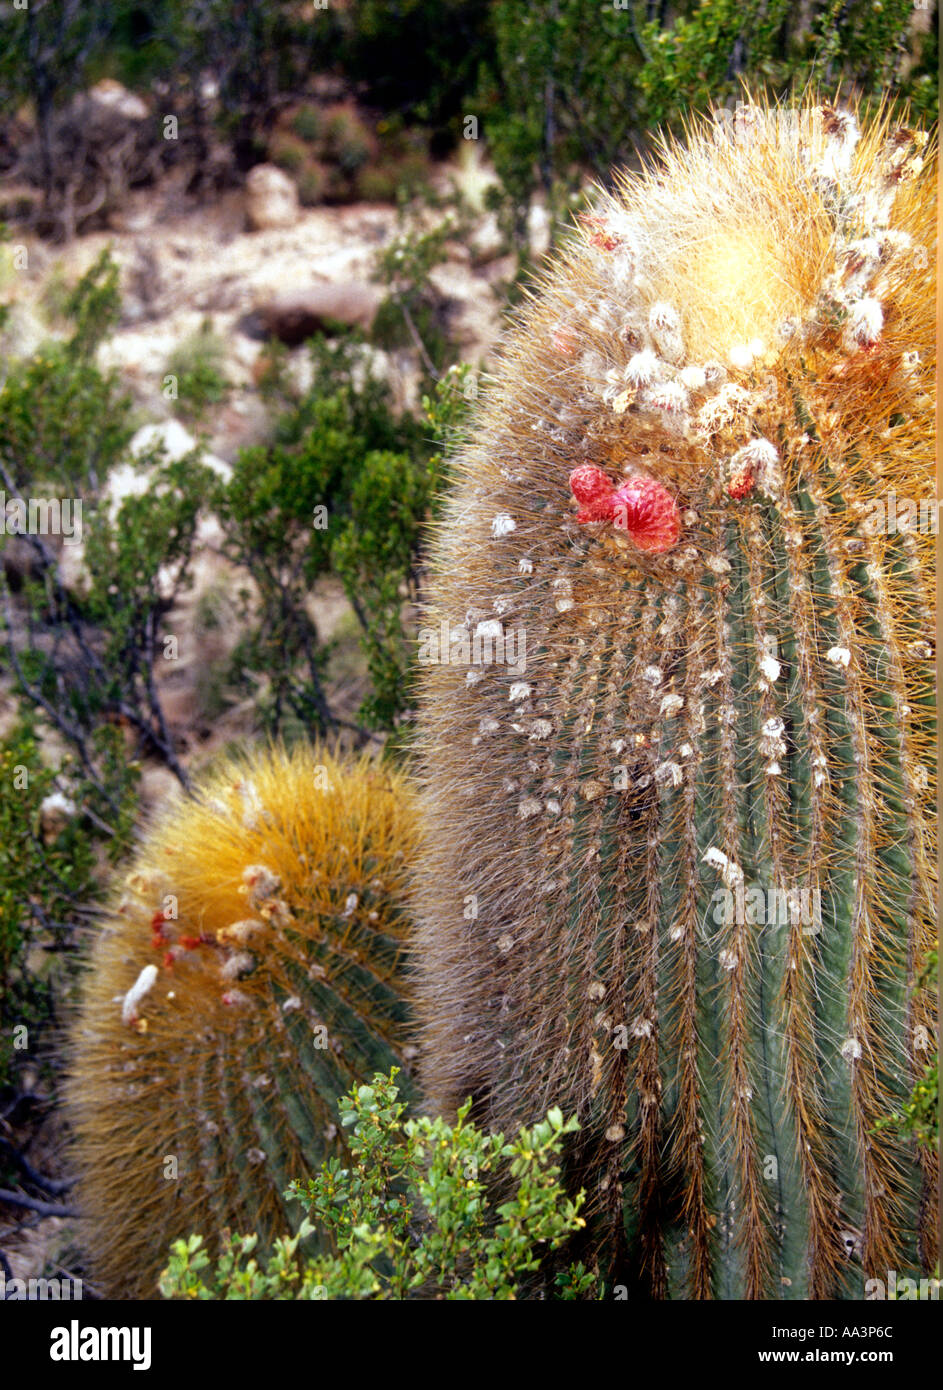 Denmoza rodacantha cacti in Mendoza Puna in Western Argentina Stock Photo